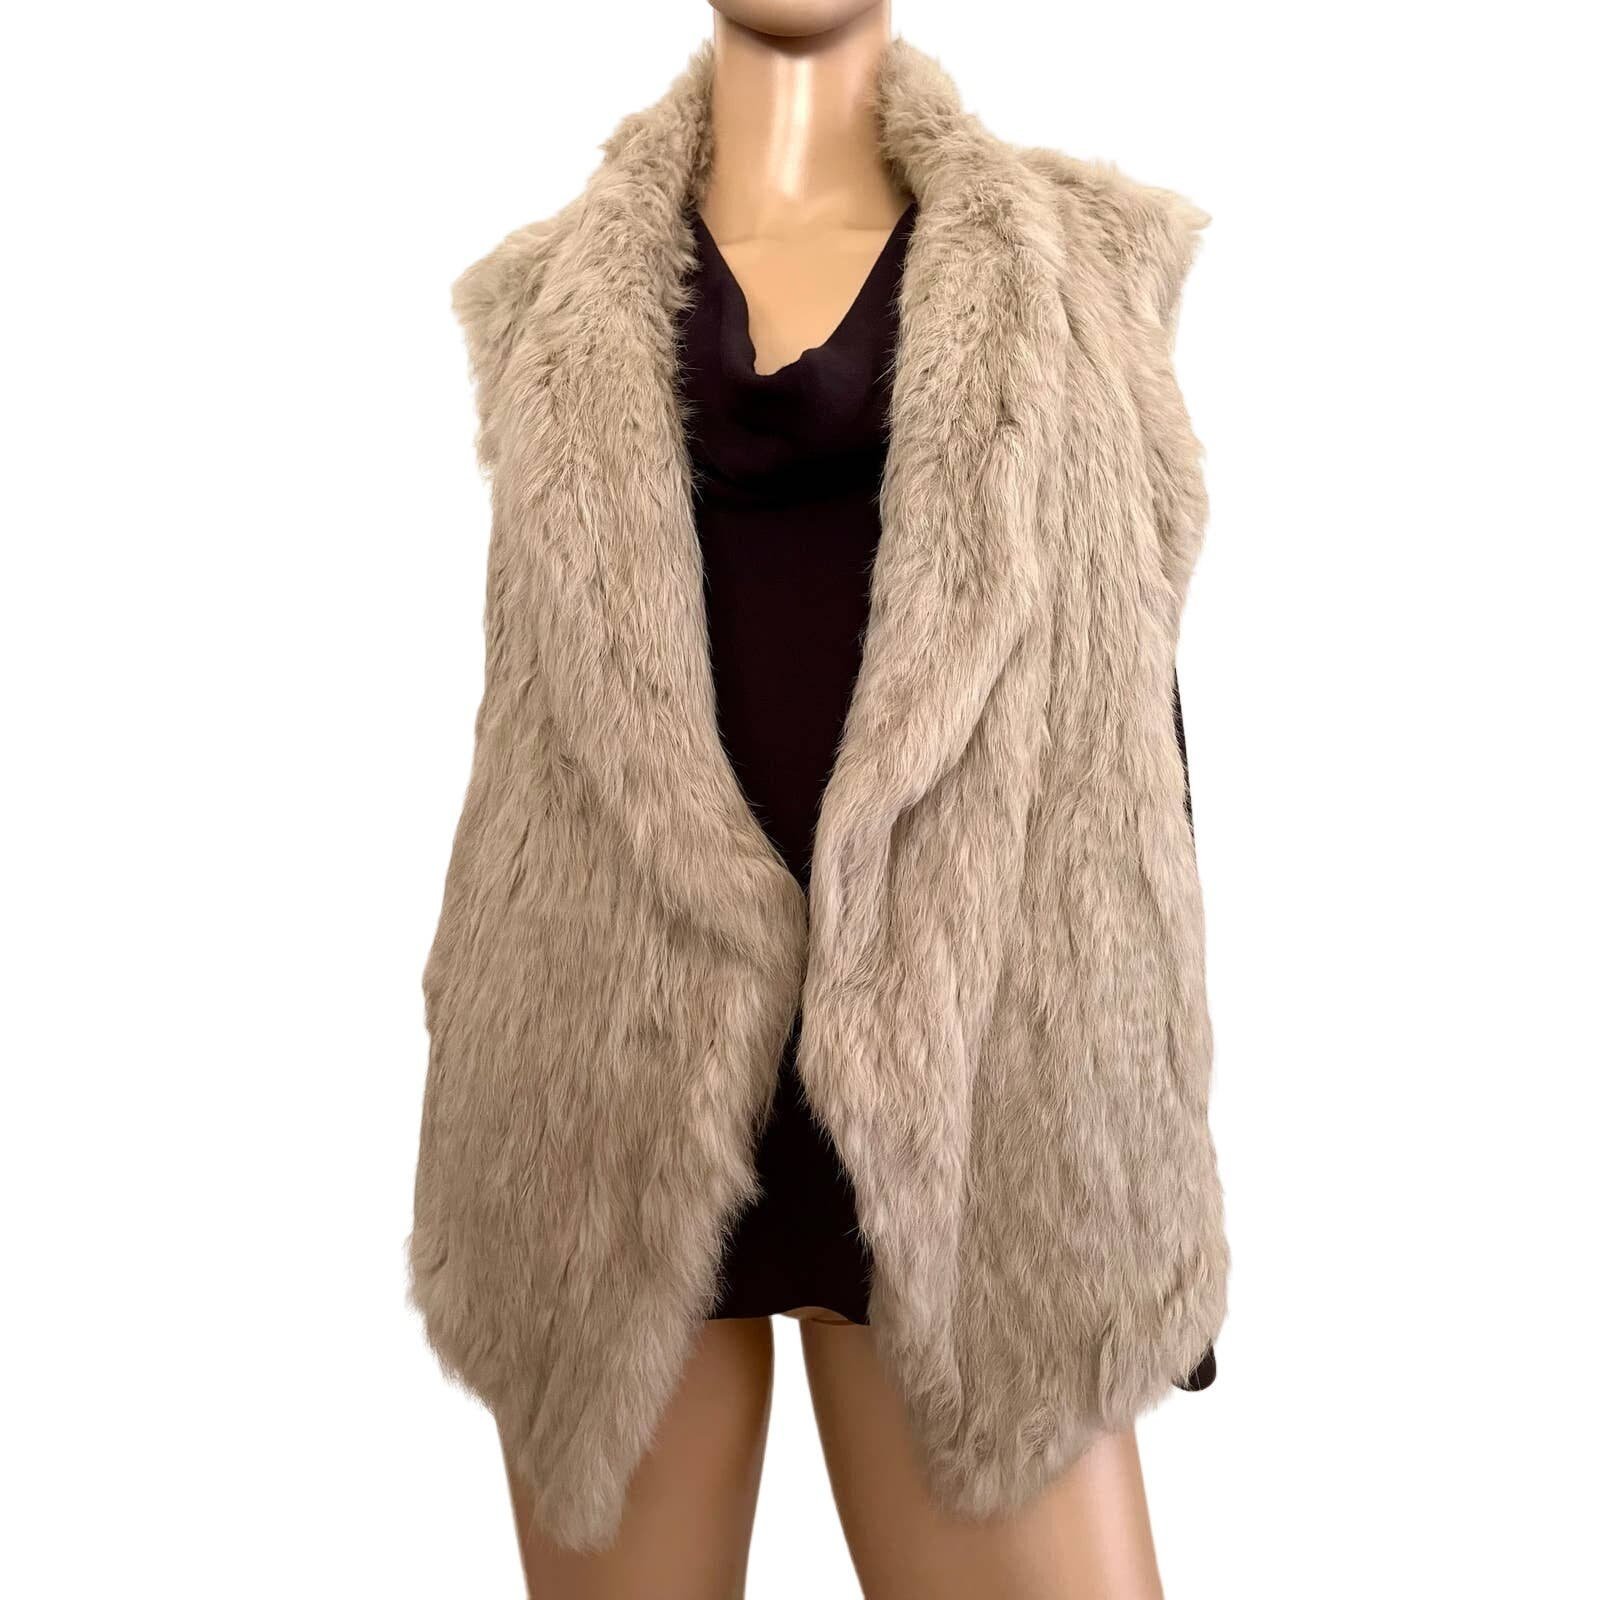 Wholesale price June Women’s Real Rabbit Soft Fur Sleev